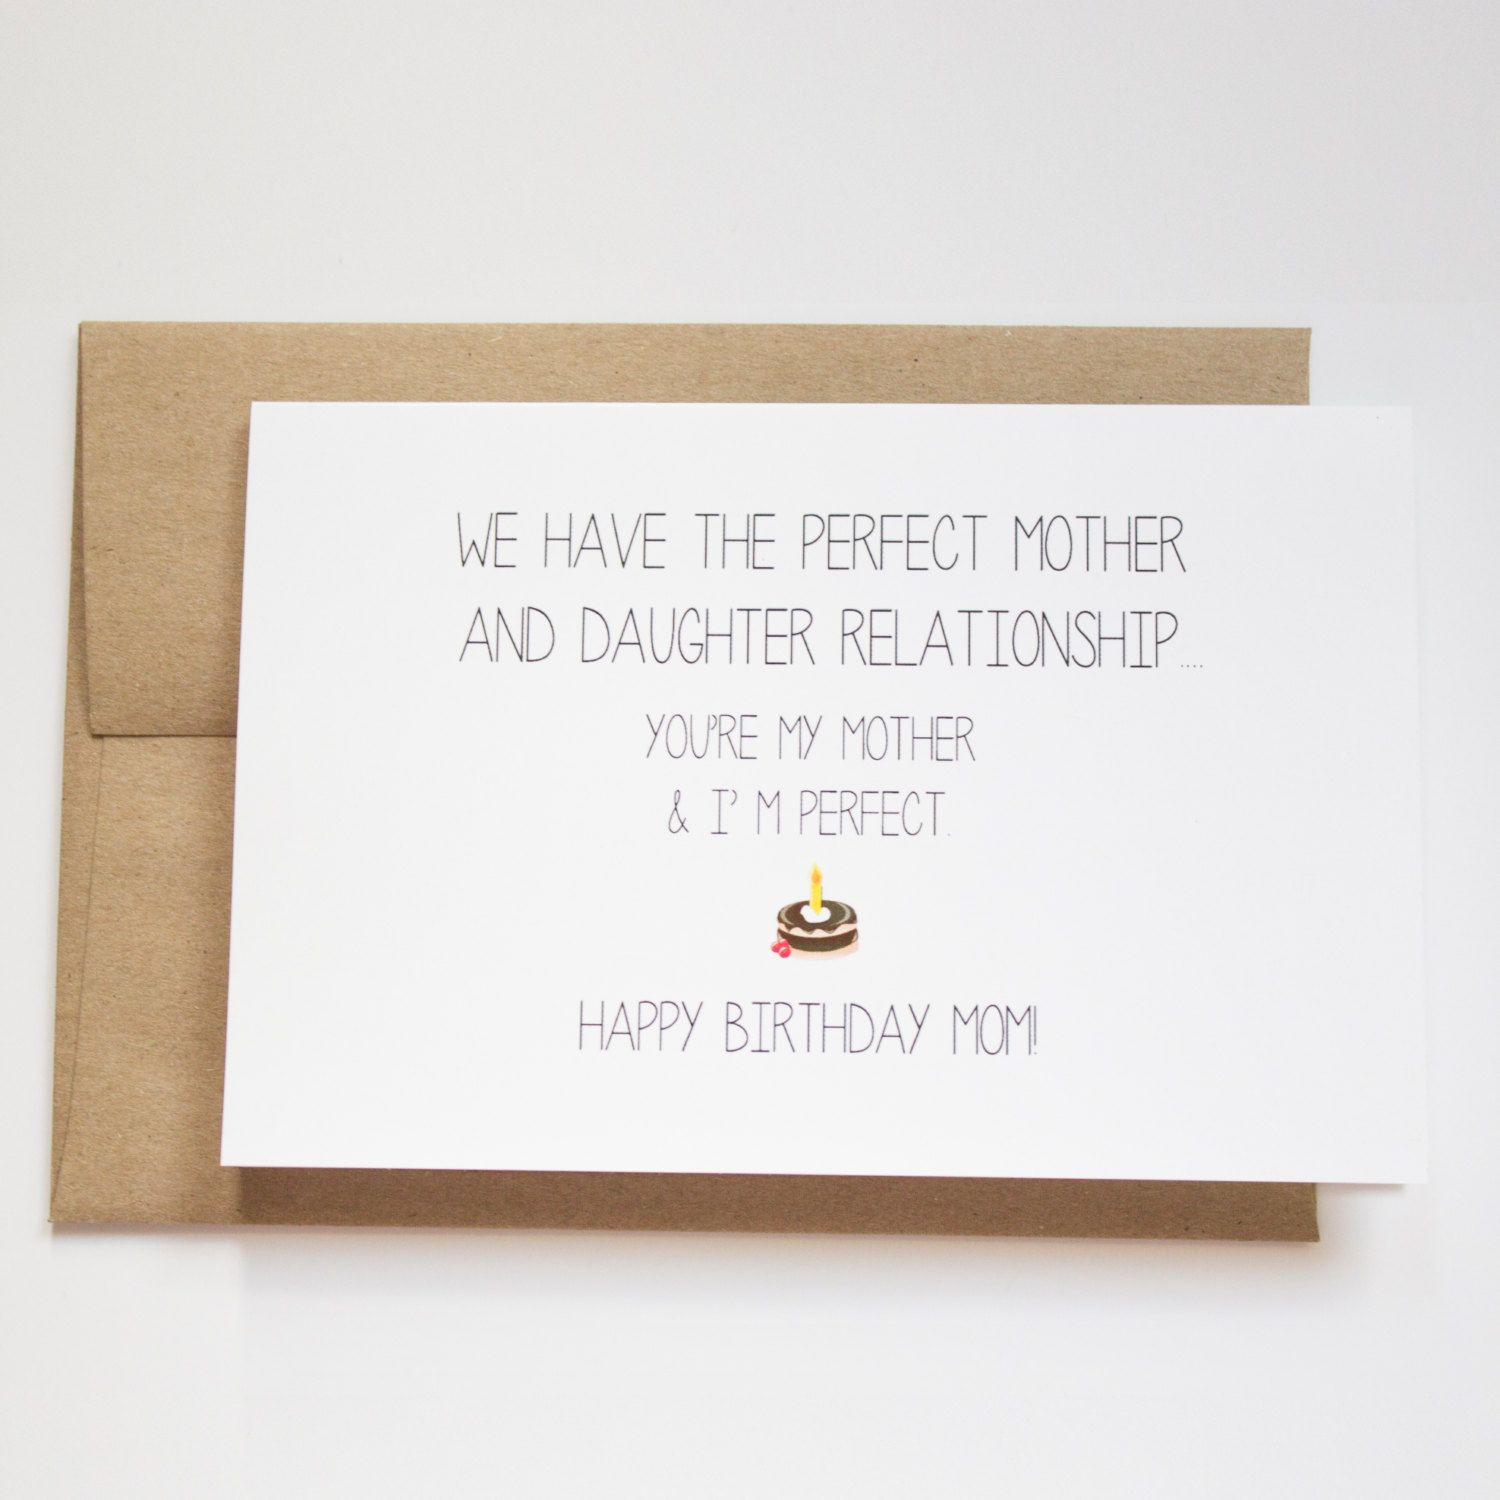 Cute Card Ideas For Birthday Cards Cute Birthday Cards For Mom Amusing Happy Birthday Mom Card